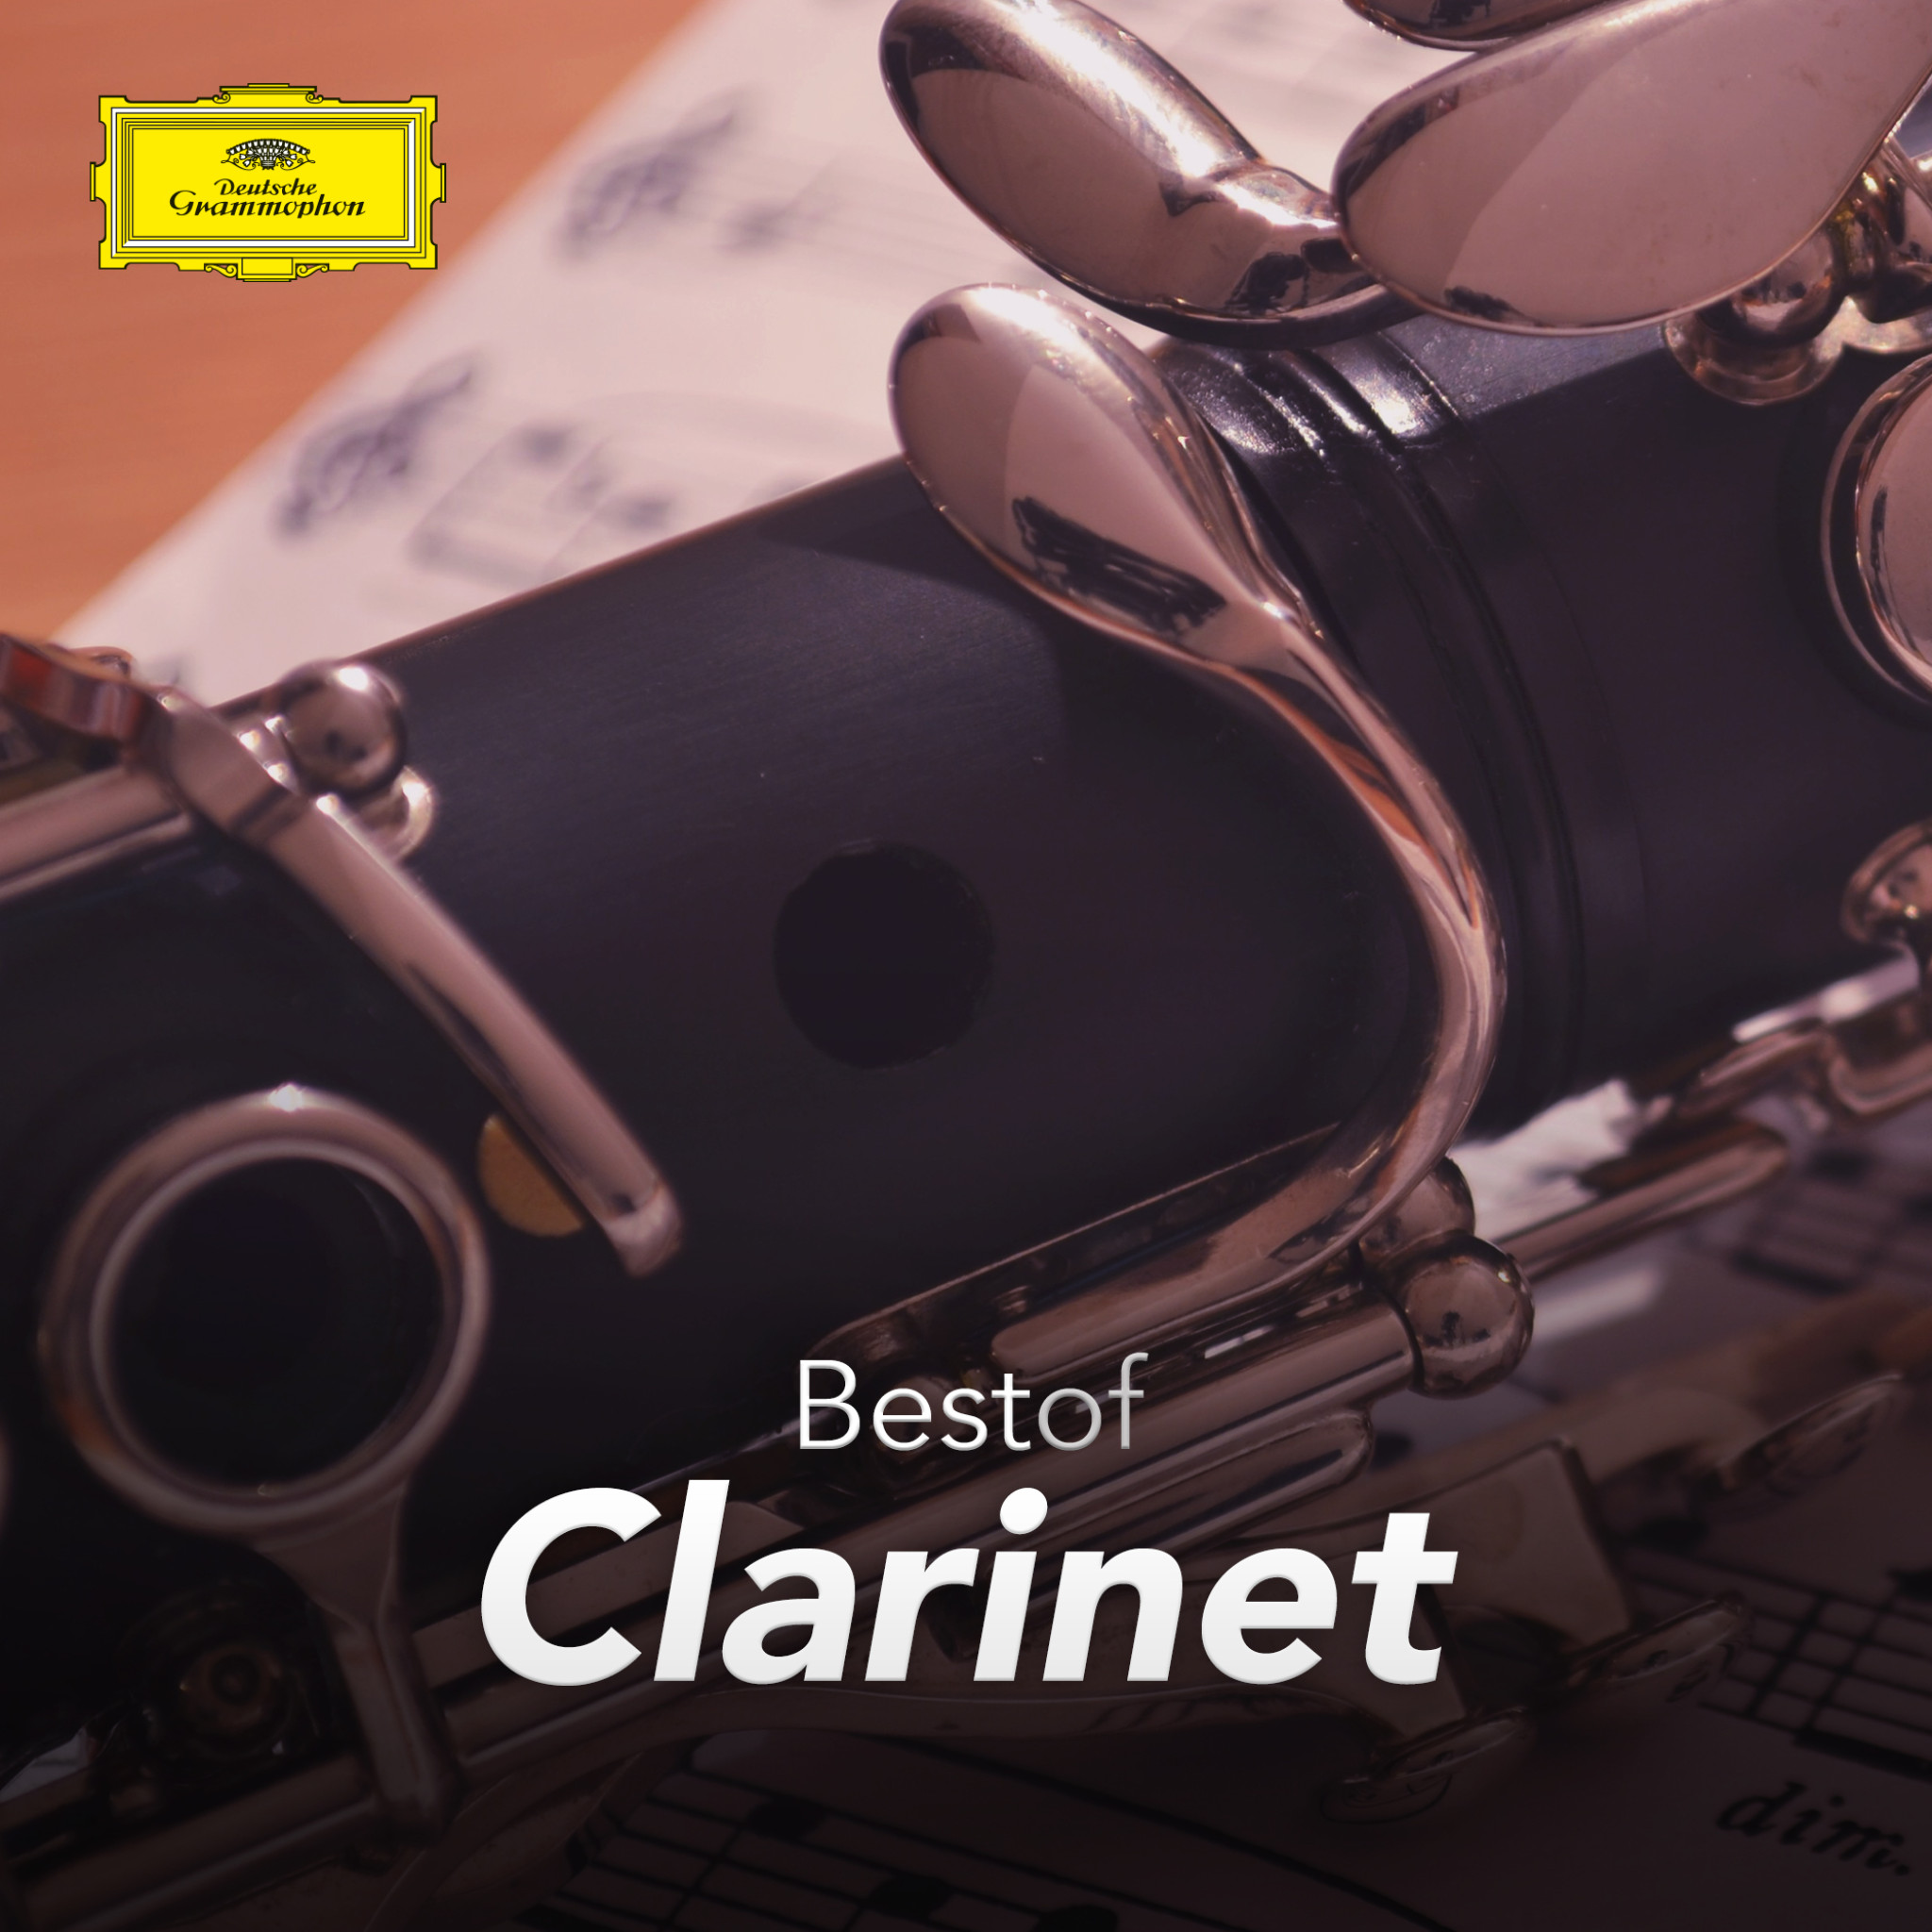 Clarinet - Best of